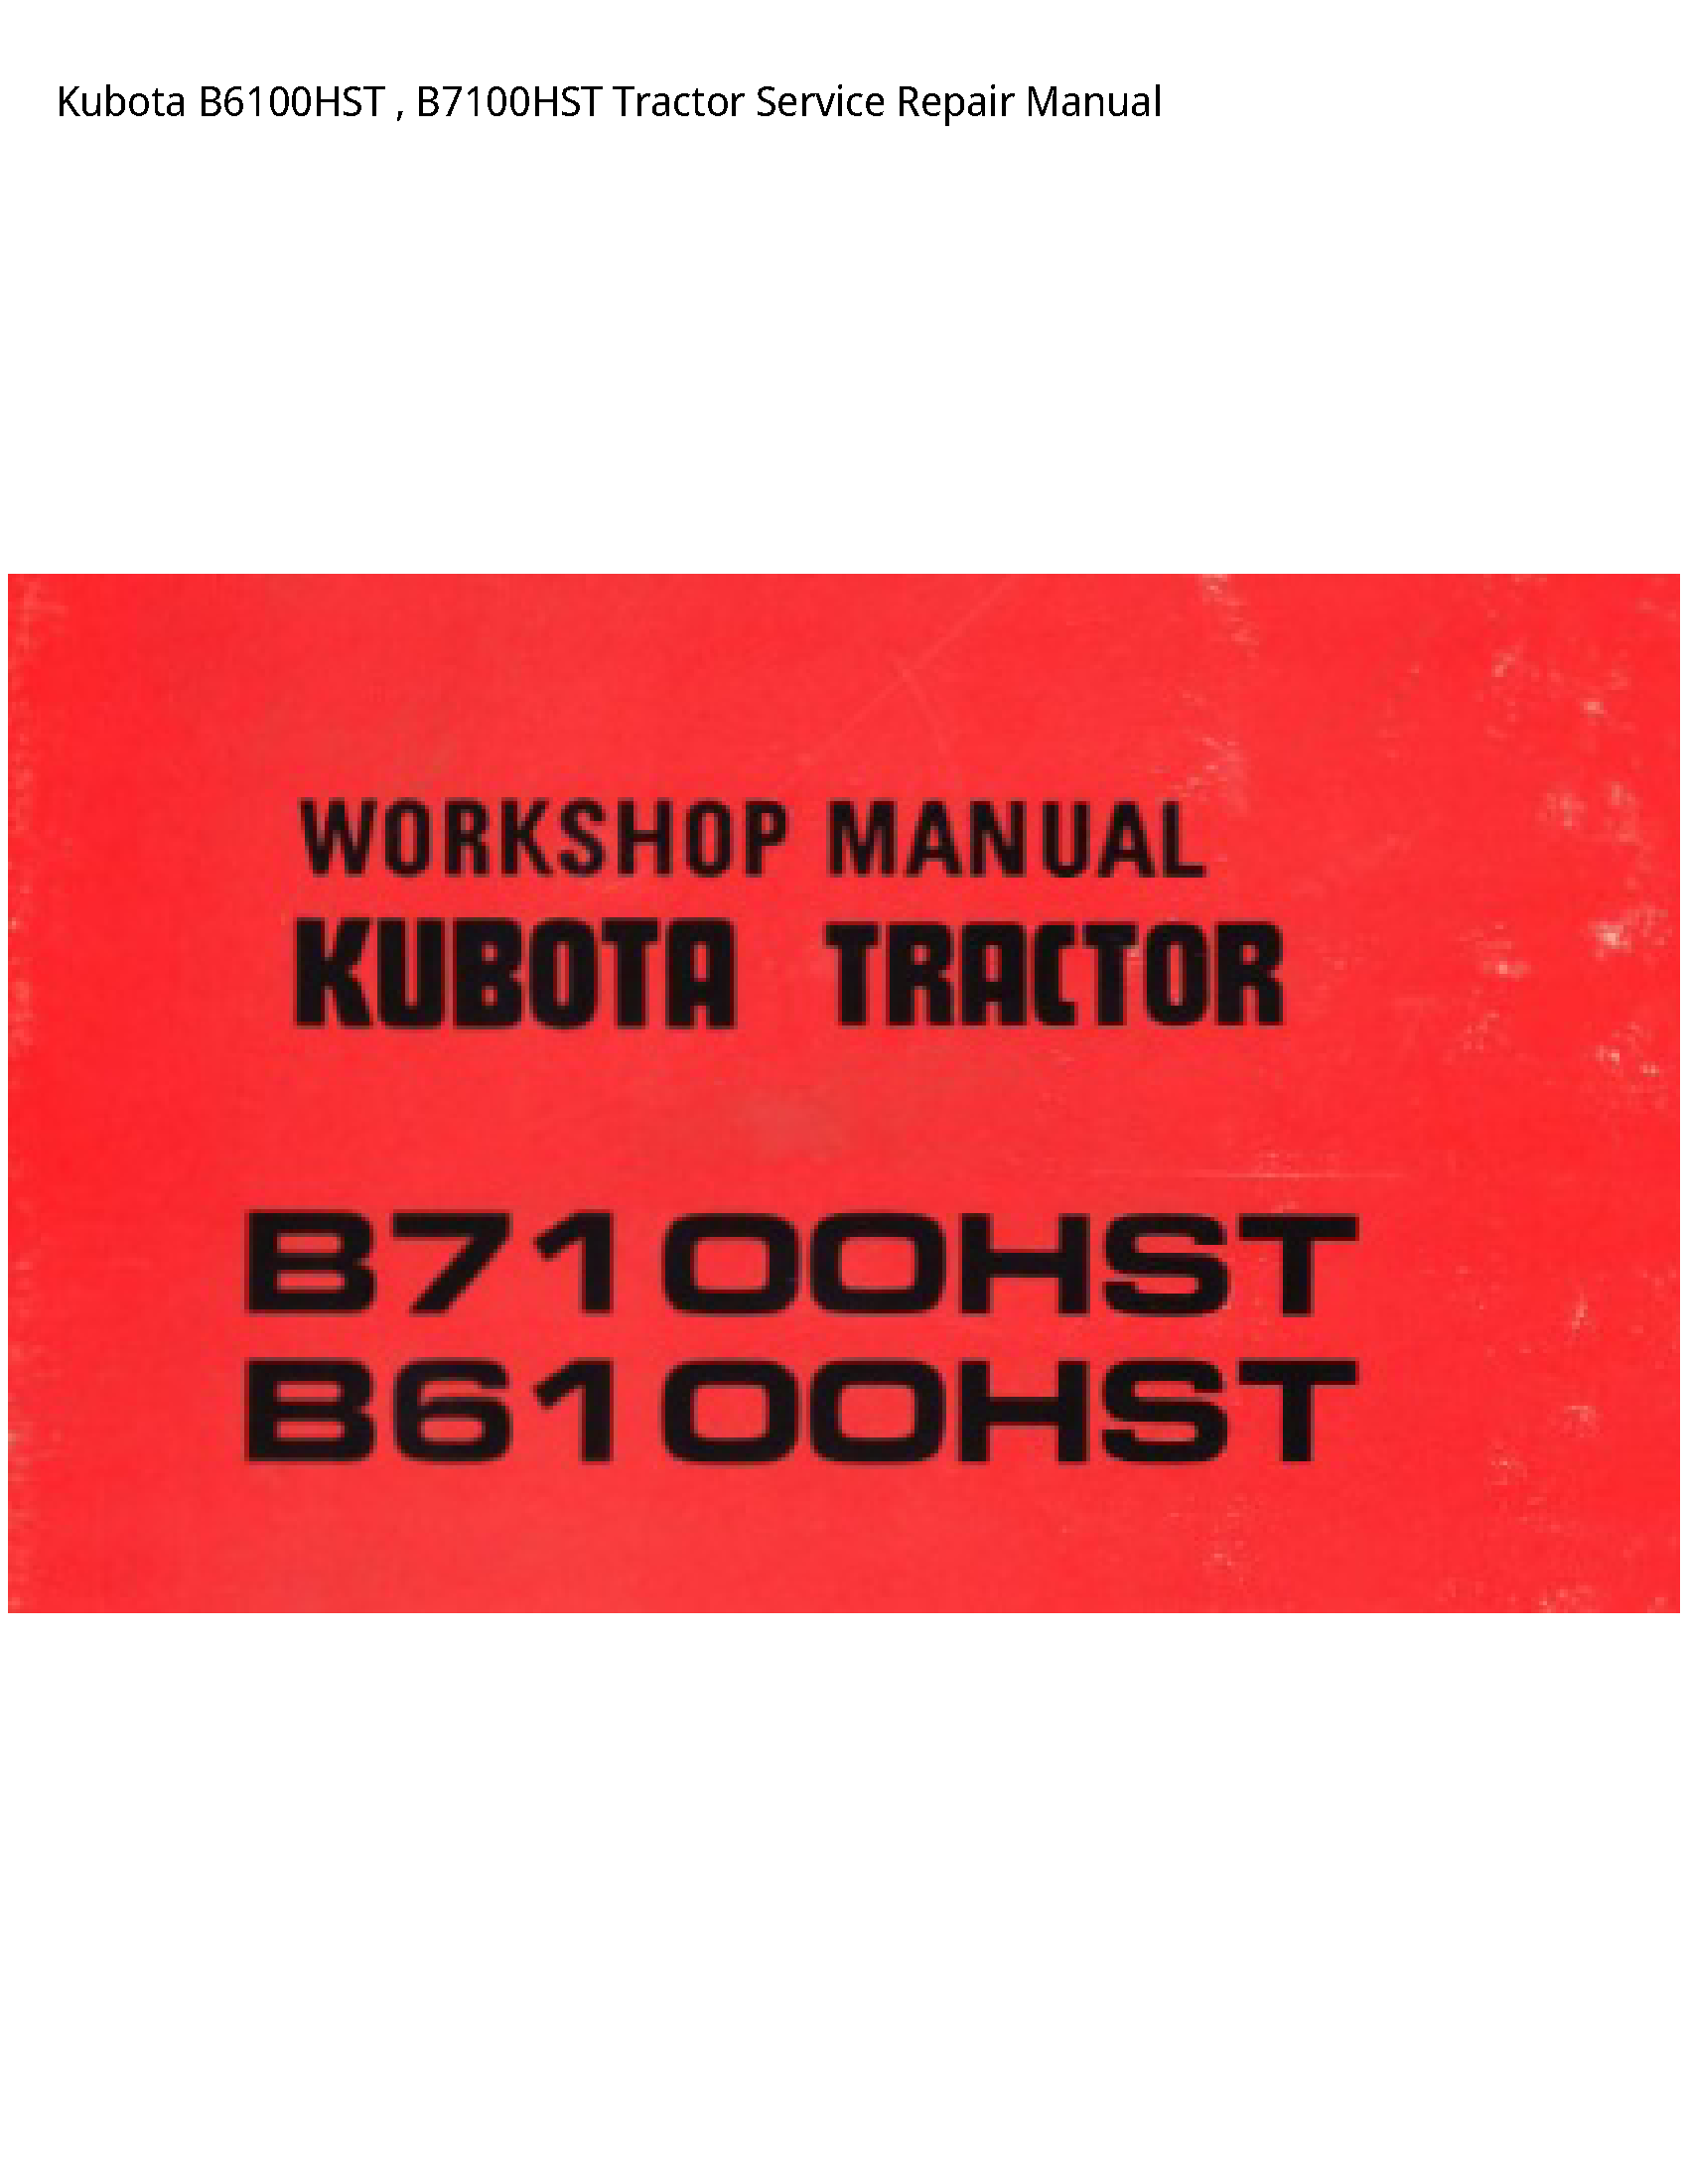 Kubota B6100HST Tractor manual